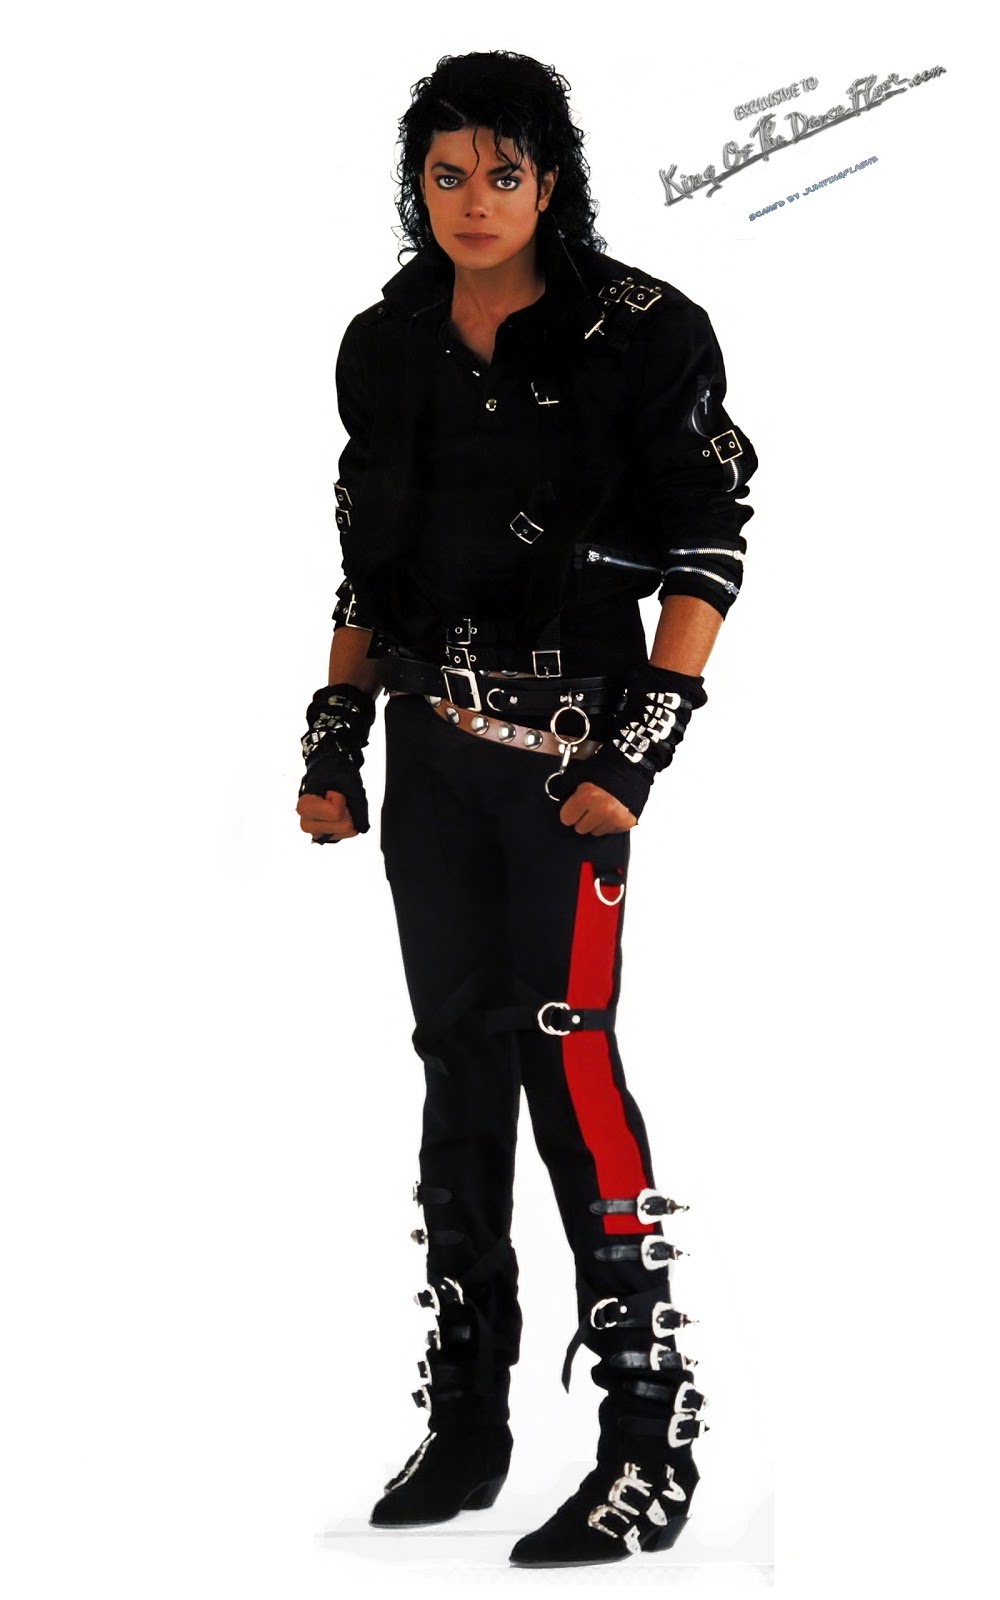 Michael-Jackson-Photoshoots-HQ-michael-jackson-31043155-1600-2560.jpg